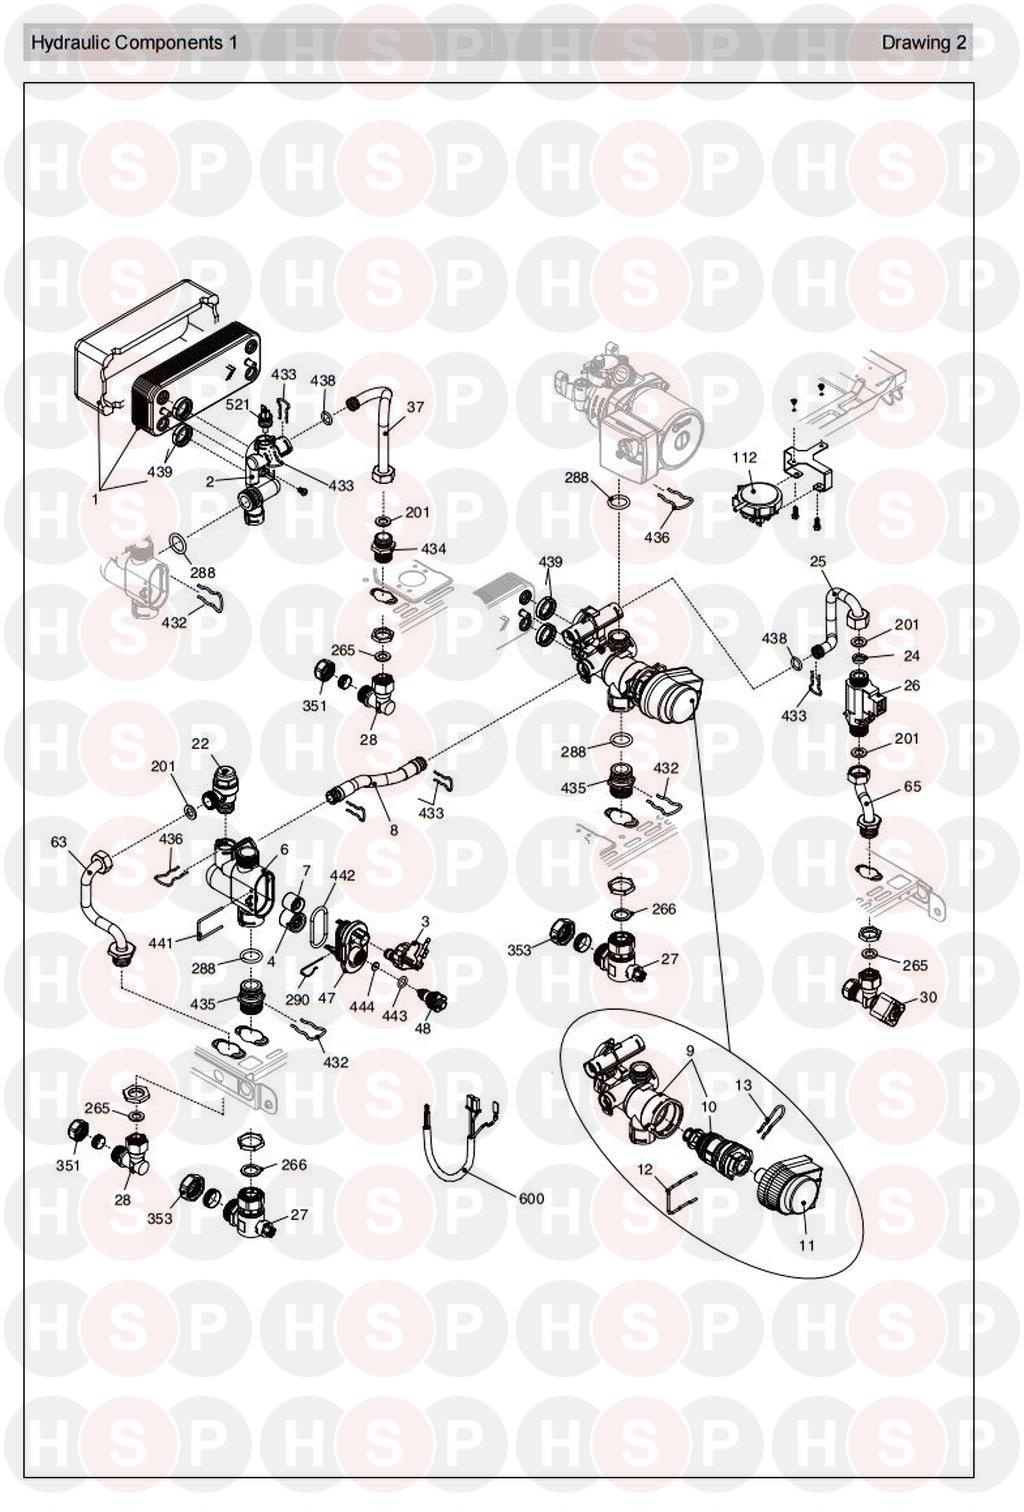 Hydraulics 1 diagram for Vokera Procombi 100HE Rev 4 (03/2010)